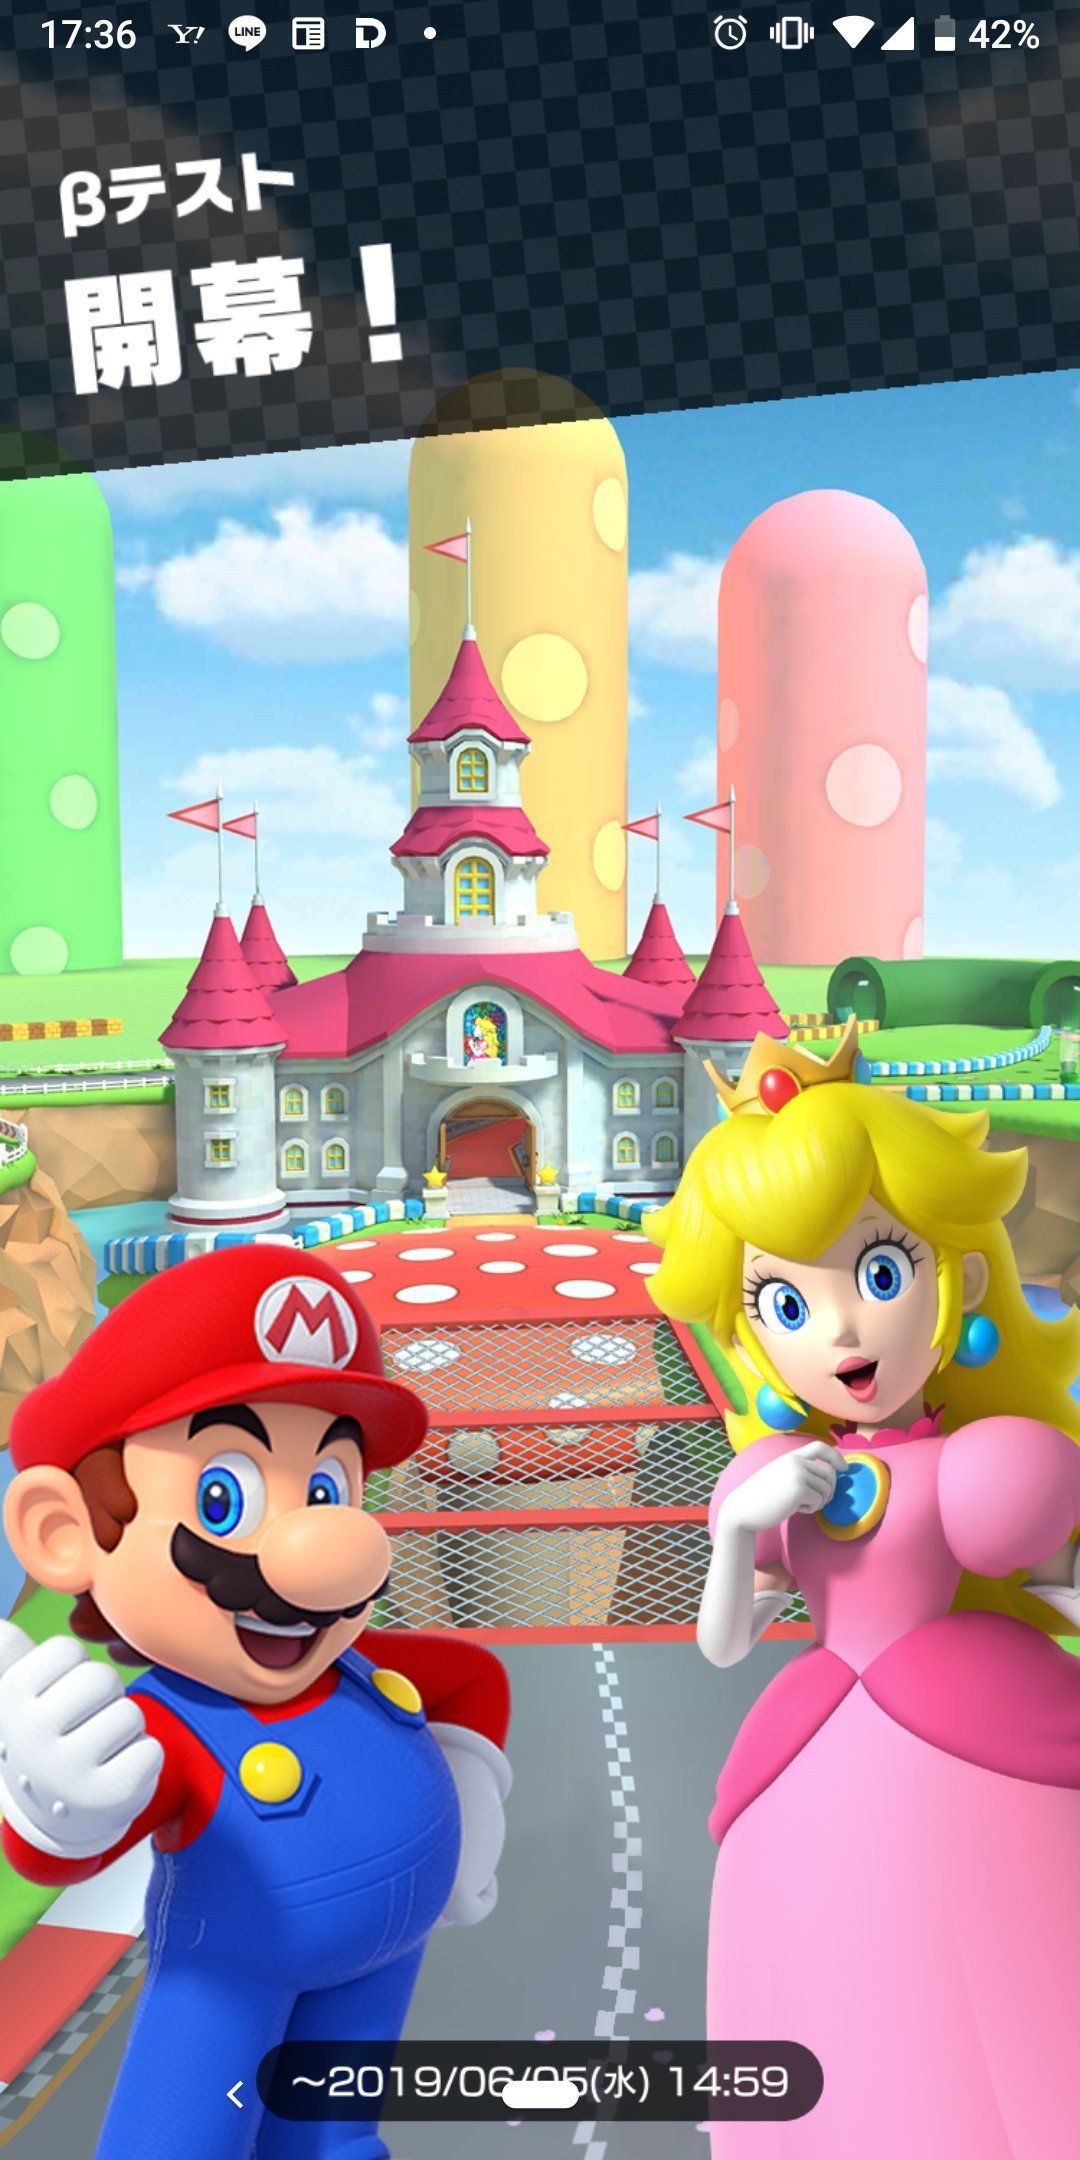 Nintendo lanza la beta de Mario Kart Tour para móviles